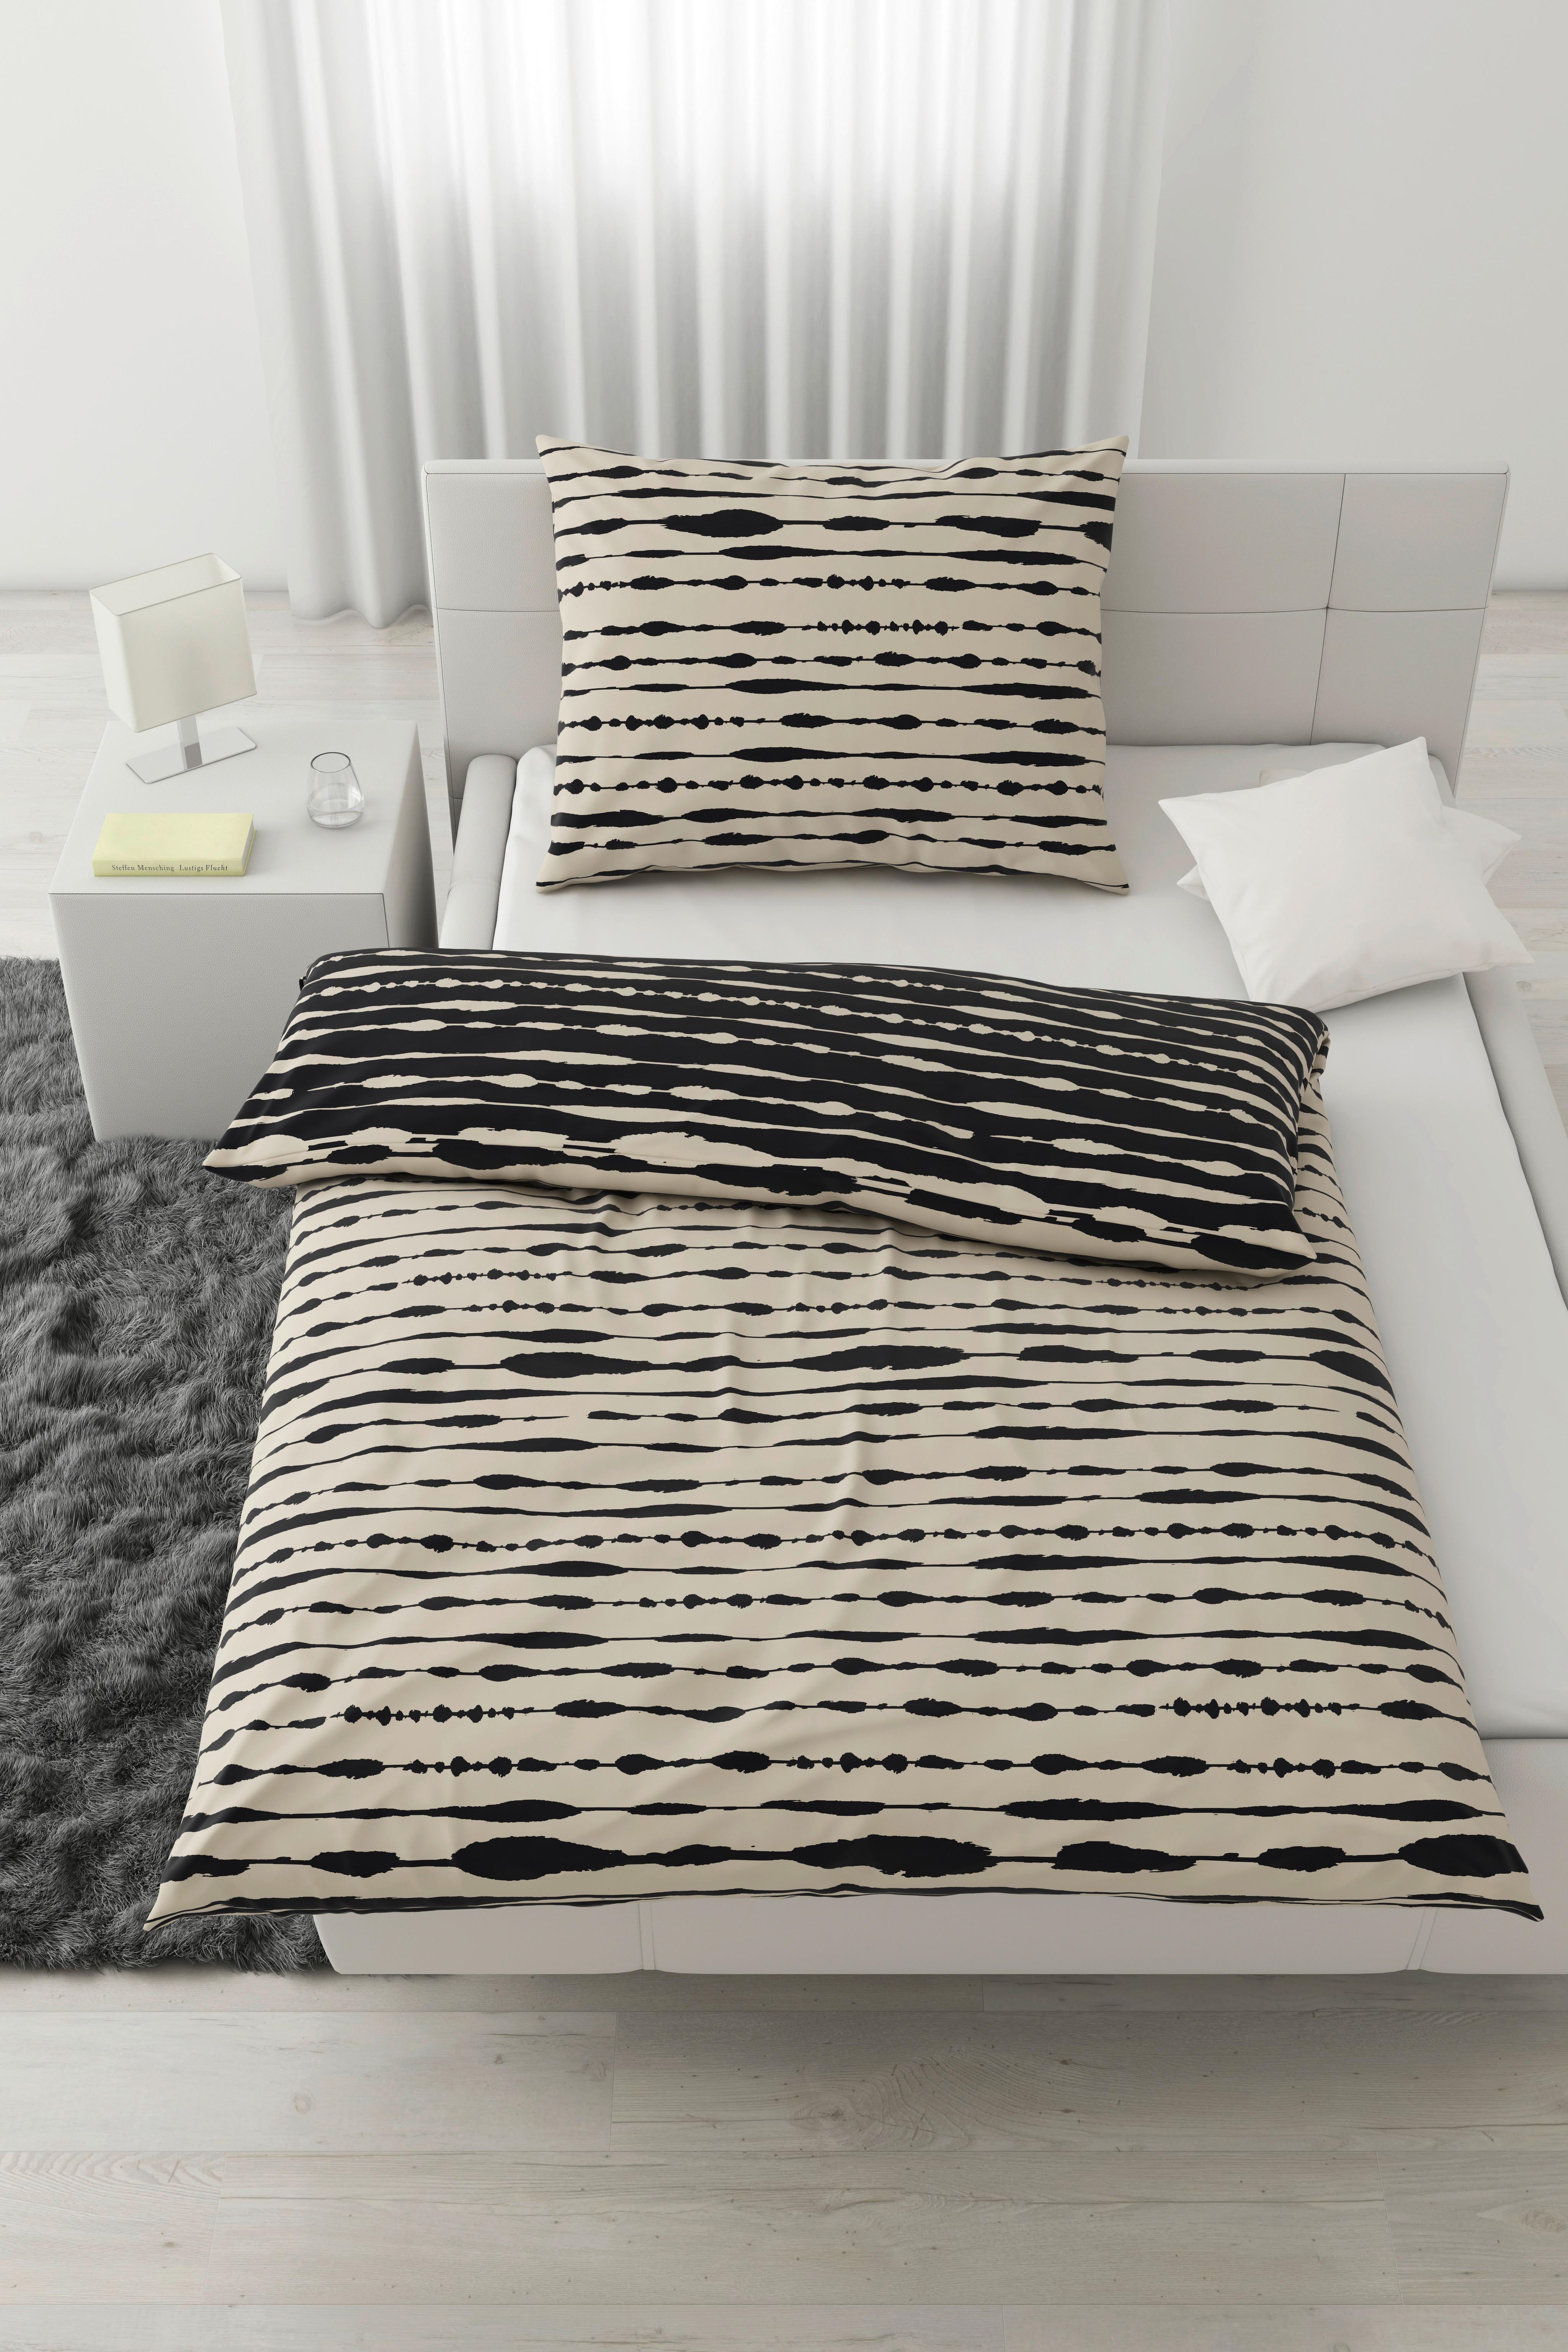 Lenjerie de pat Fine line Wende - alb/negru, Modern, textil (140/200cm) - Modern Living